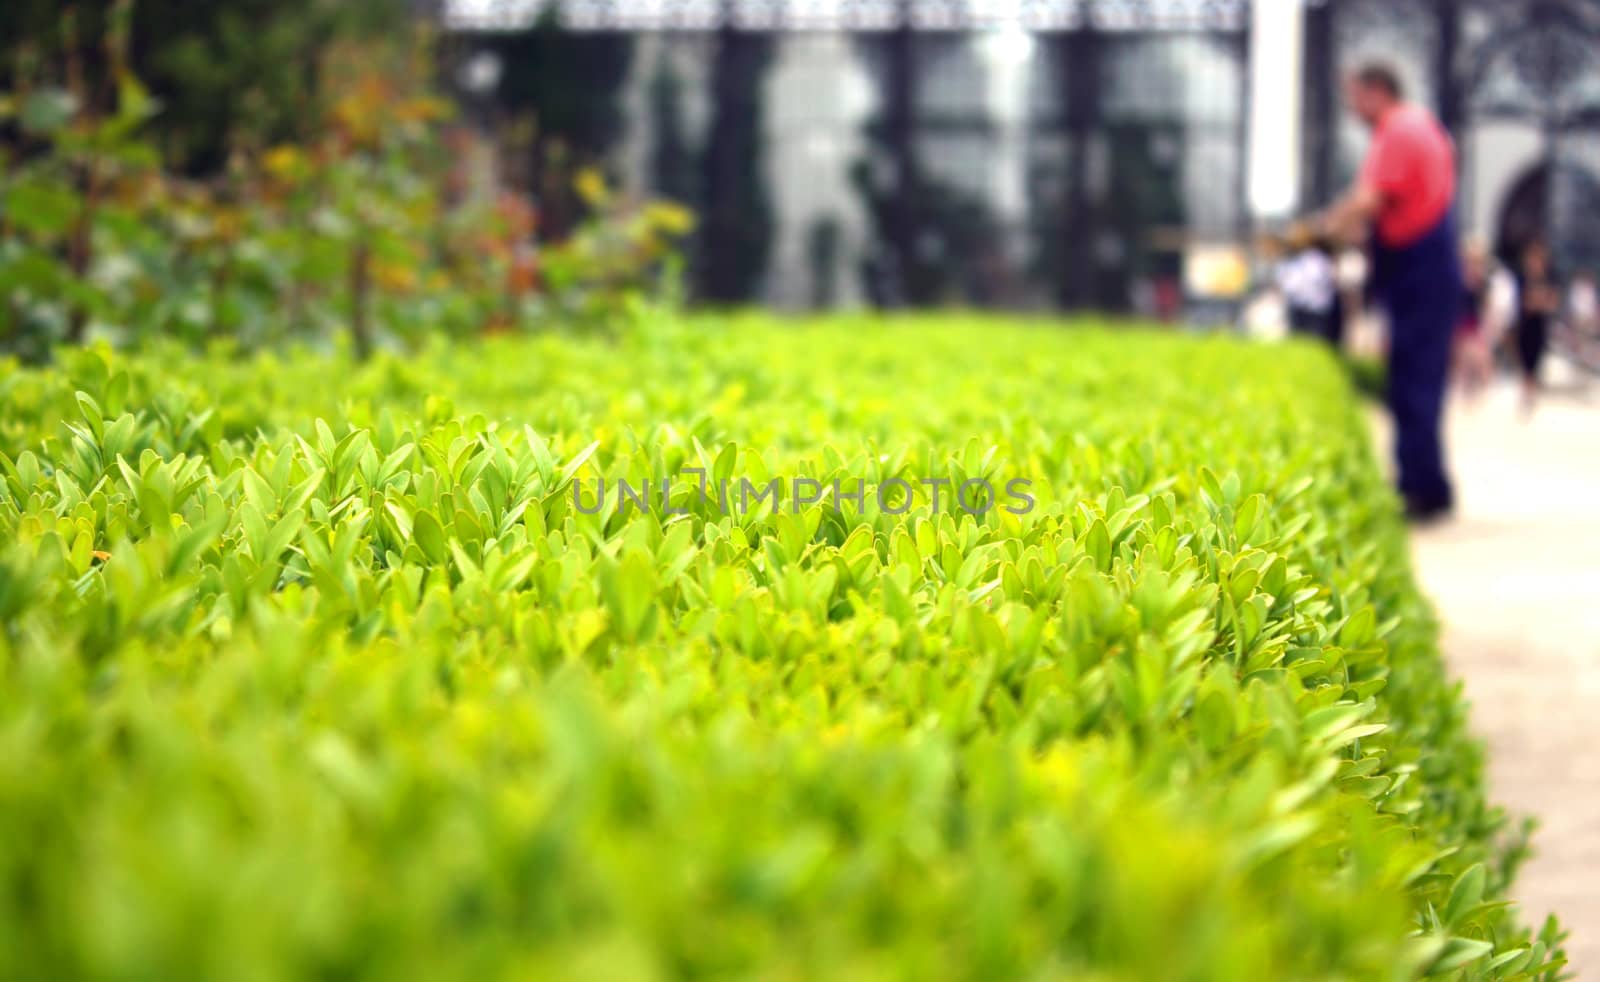 Gardener and grass, close-up by MartMartov